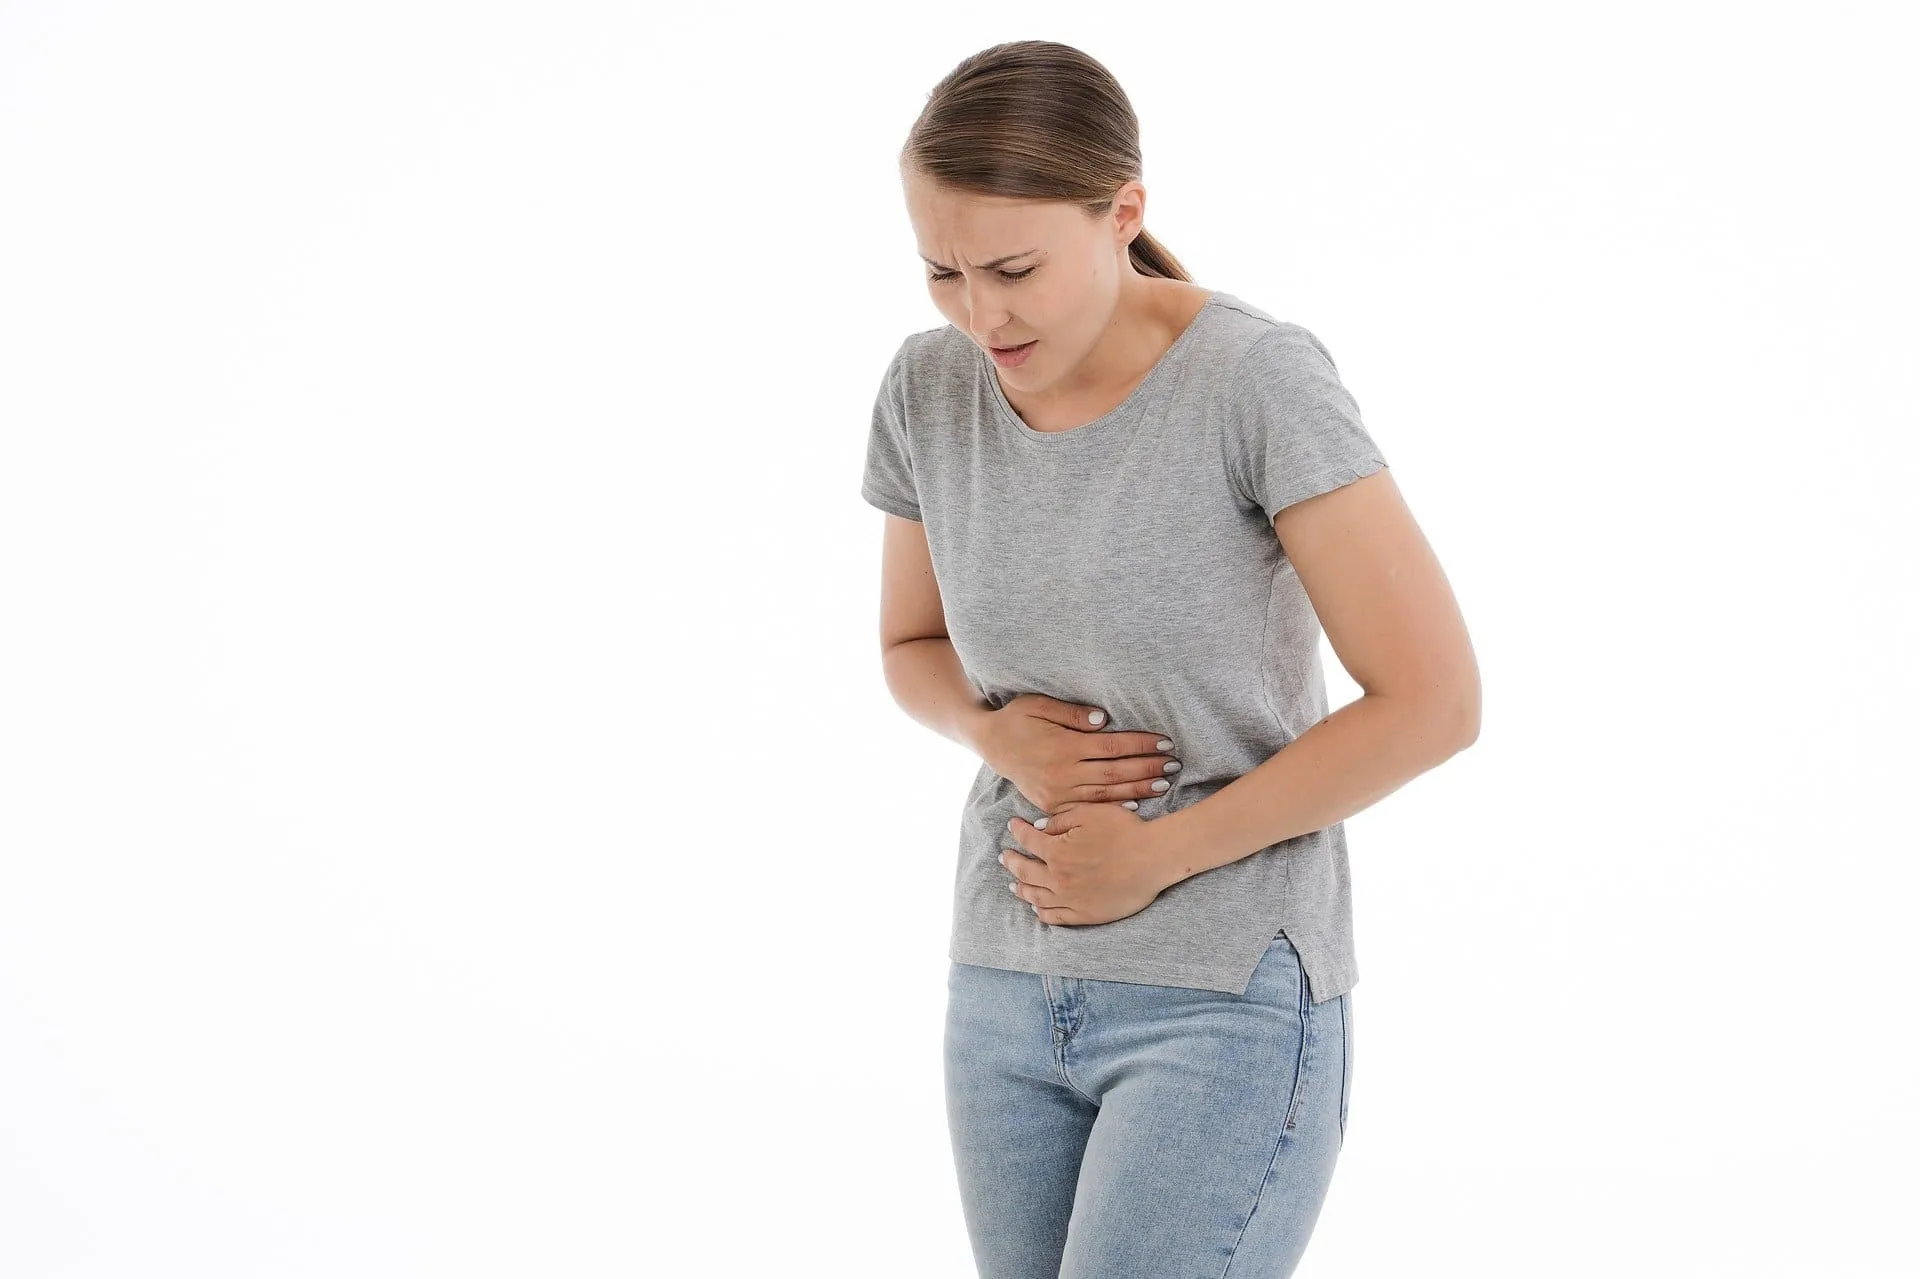 Boala Crohn: Simptome, cauze si tratament